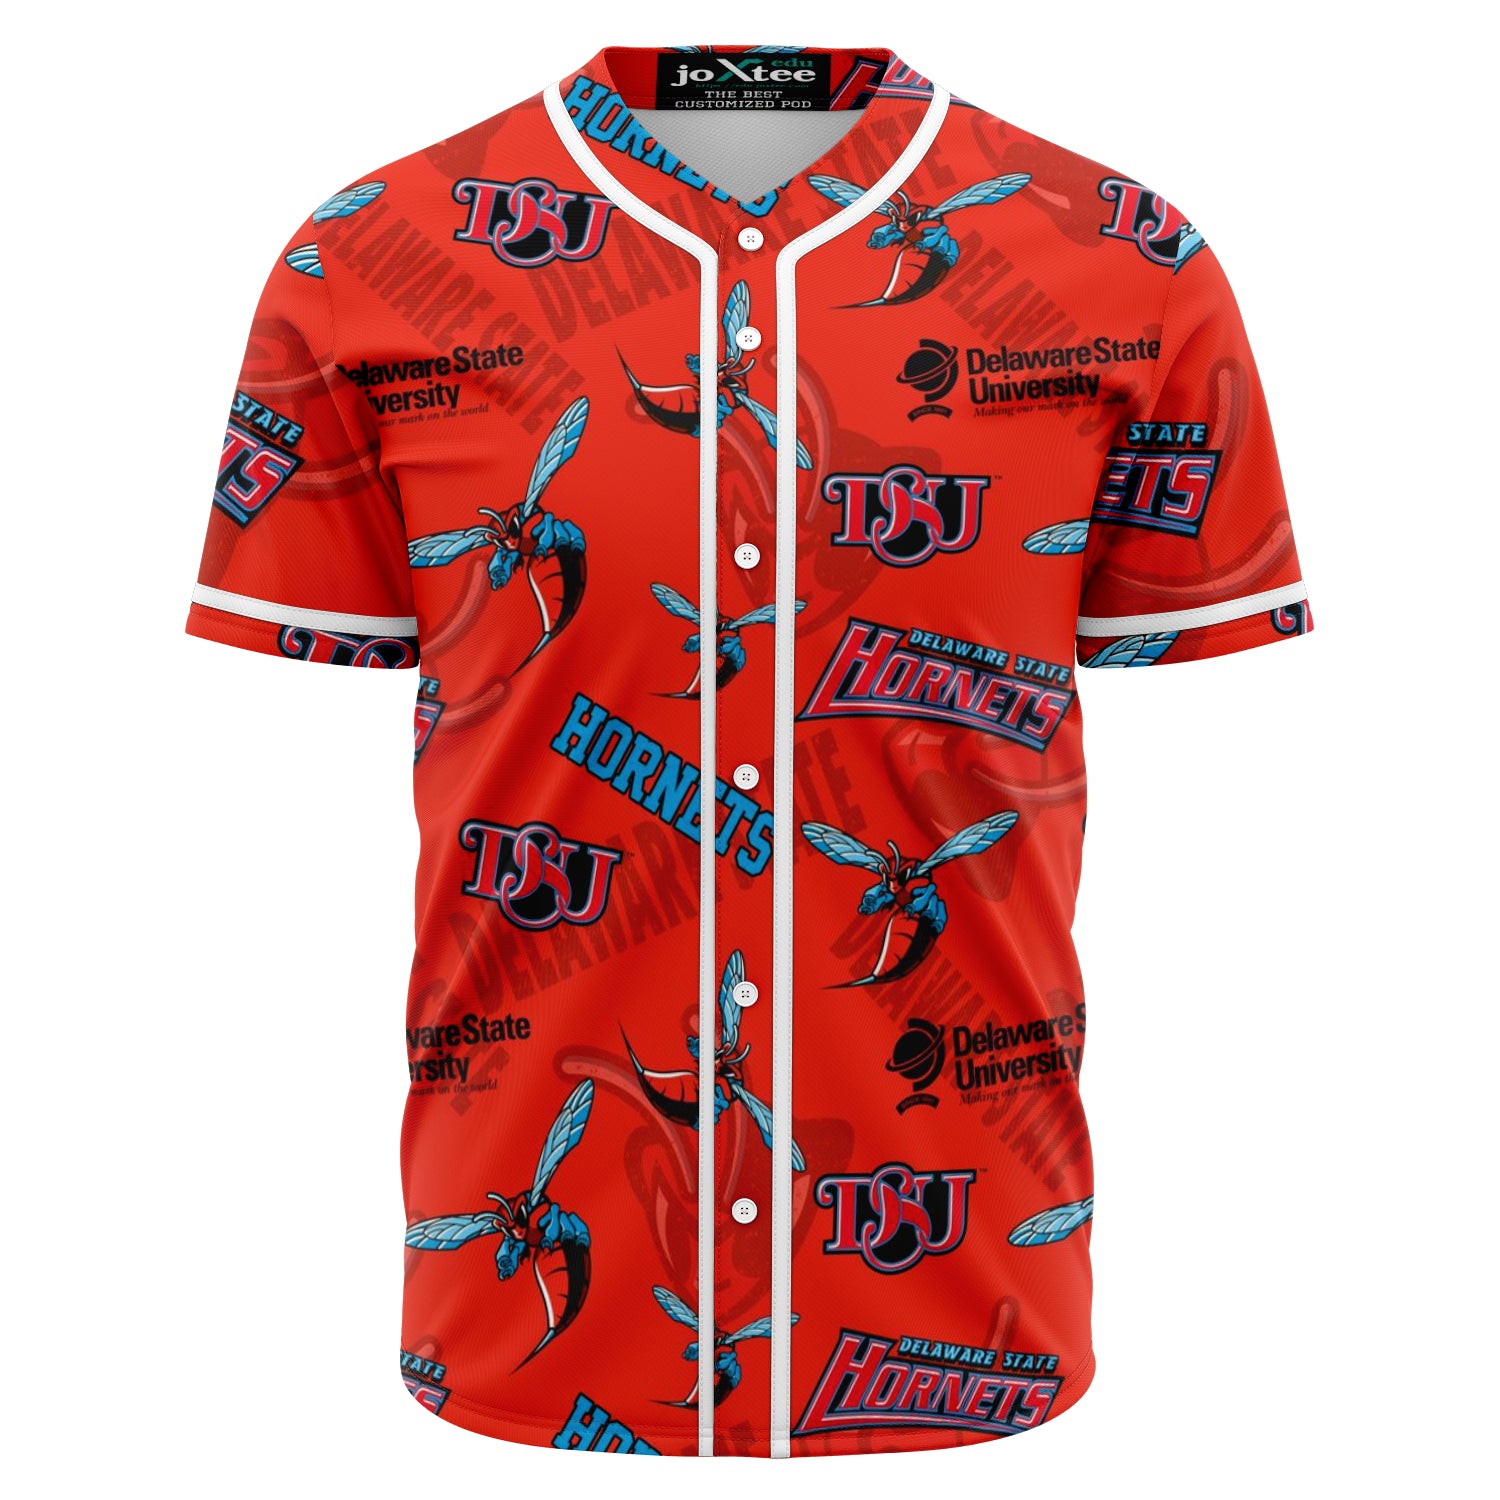 Dsu Hornets Baseball jersey v604